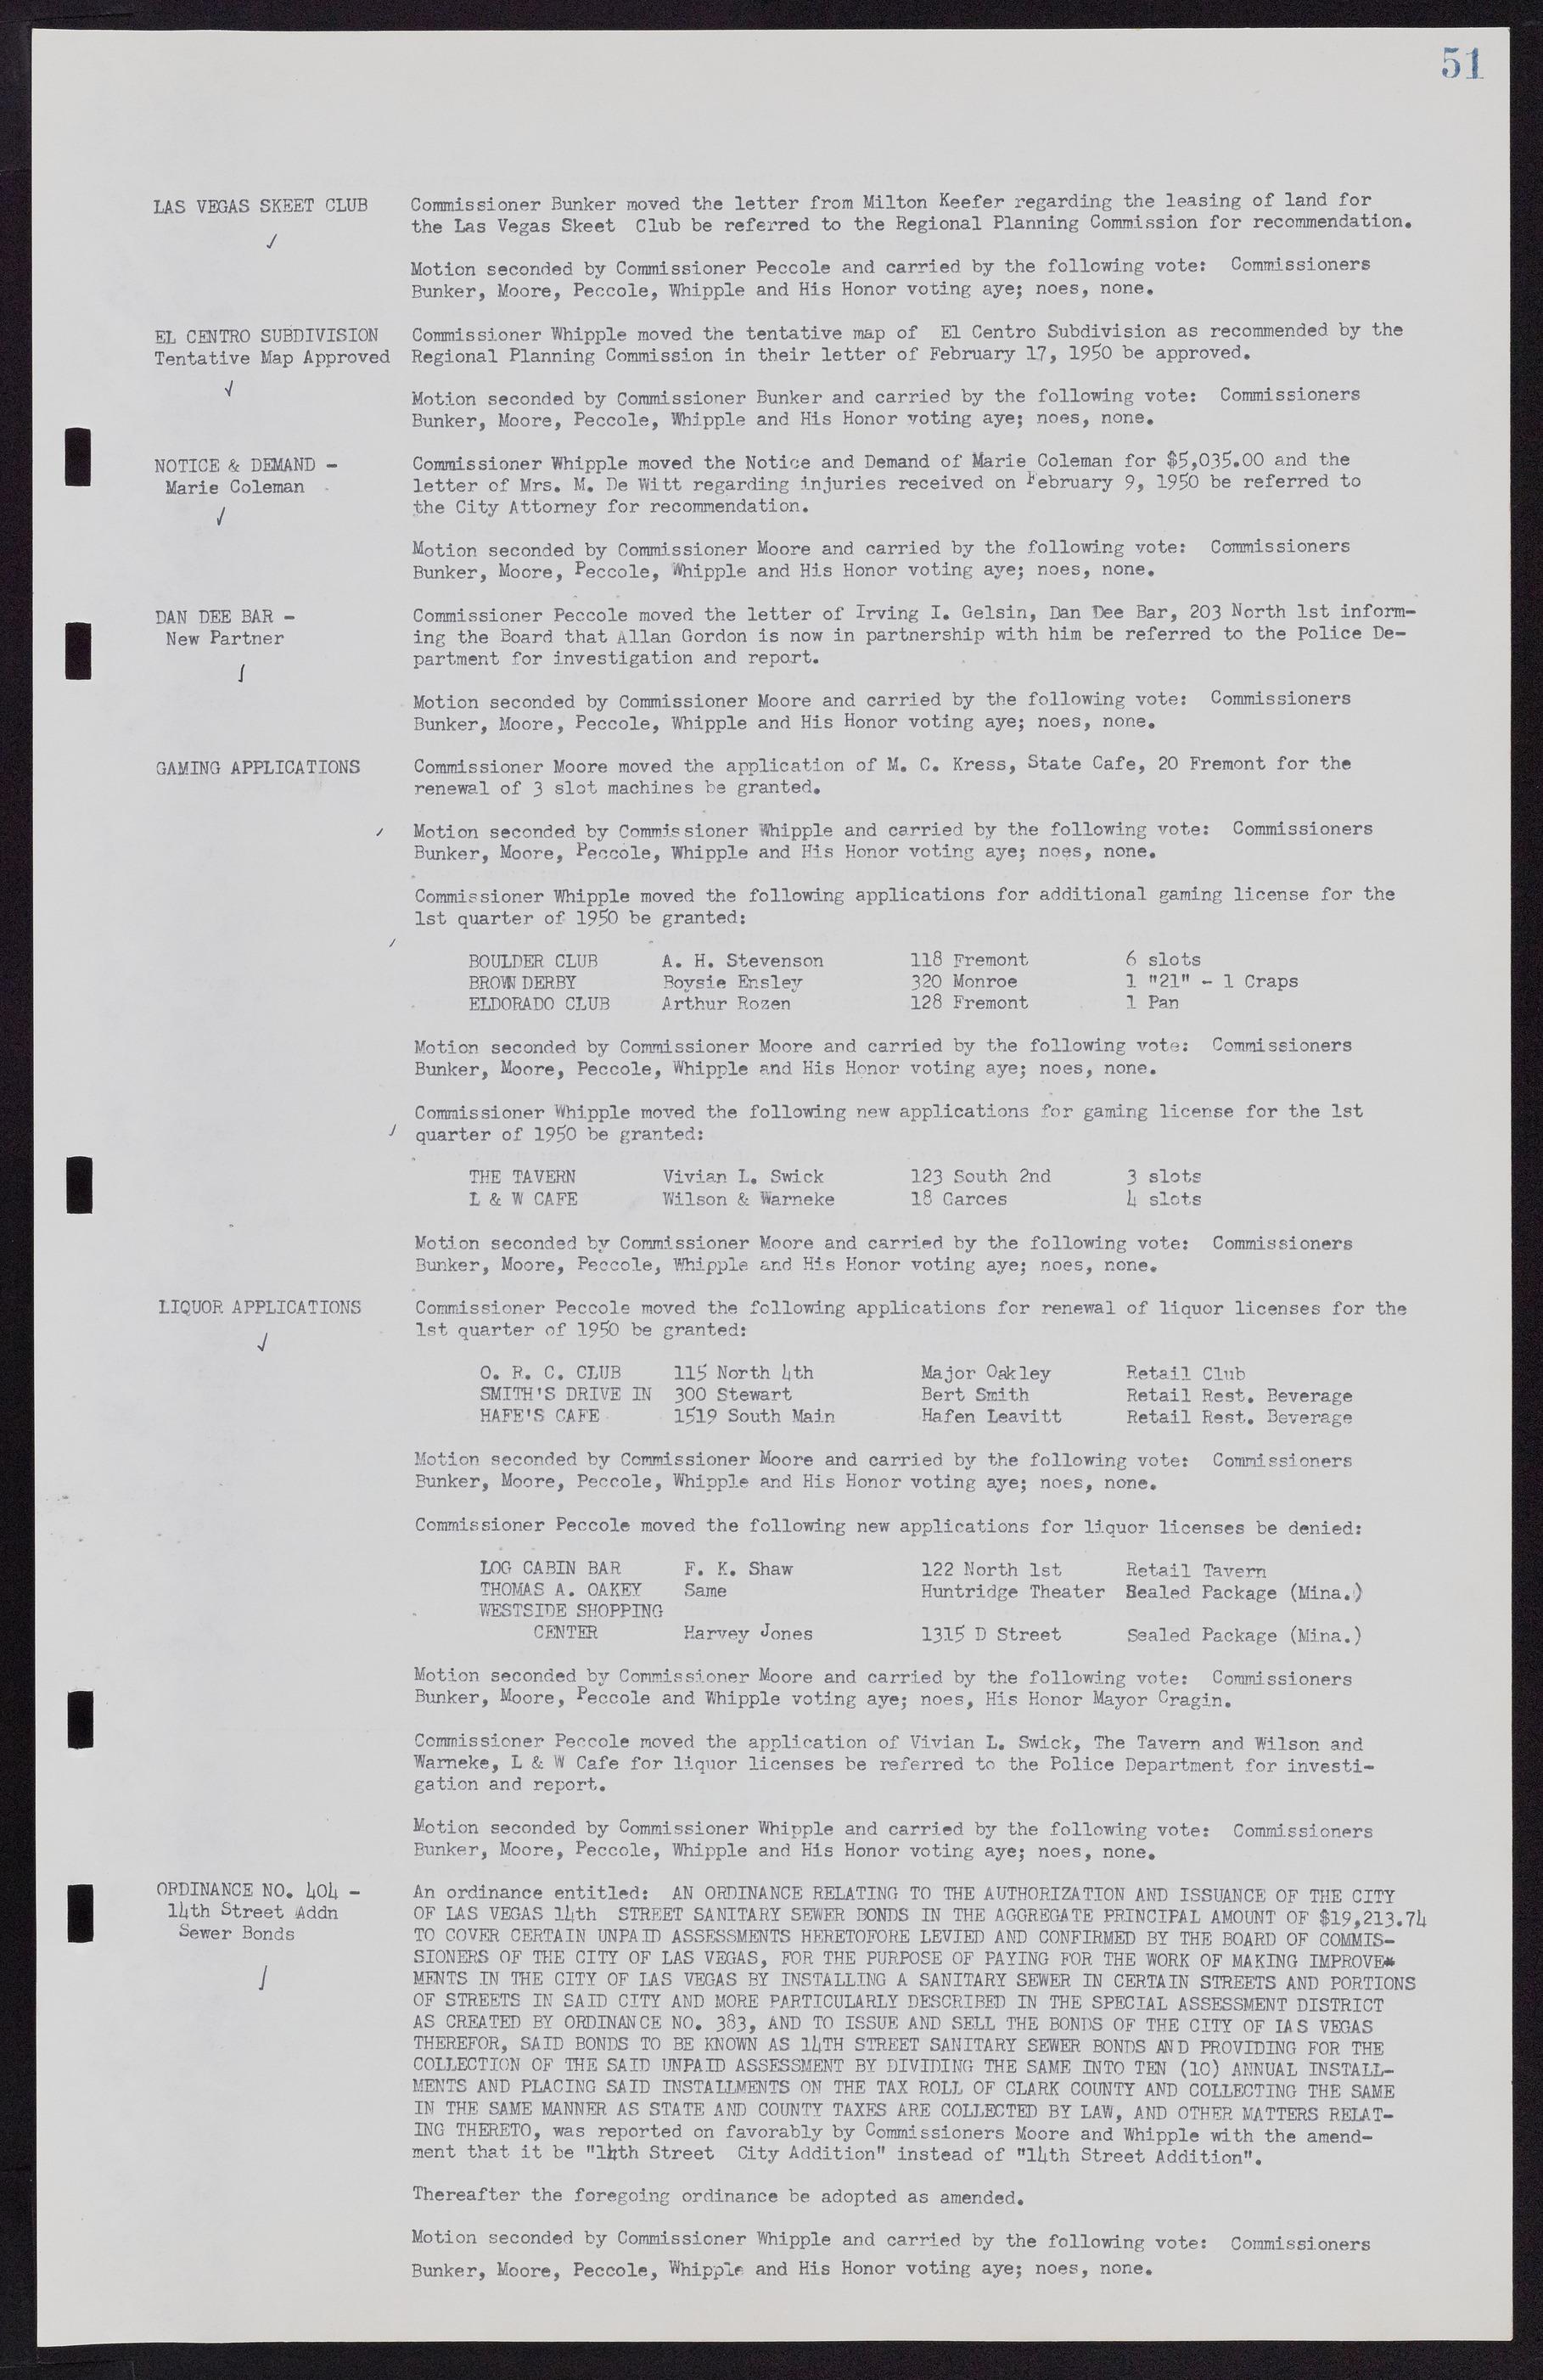 Las Vegas City Commission Minutes, November 7, 1949 to May 21, 1952, lvc000007-59